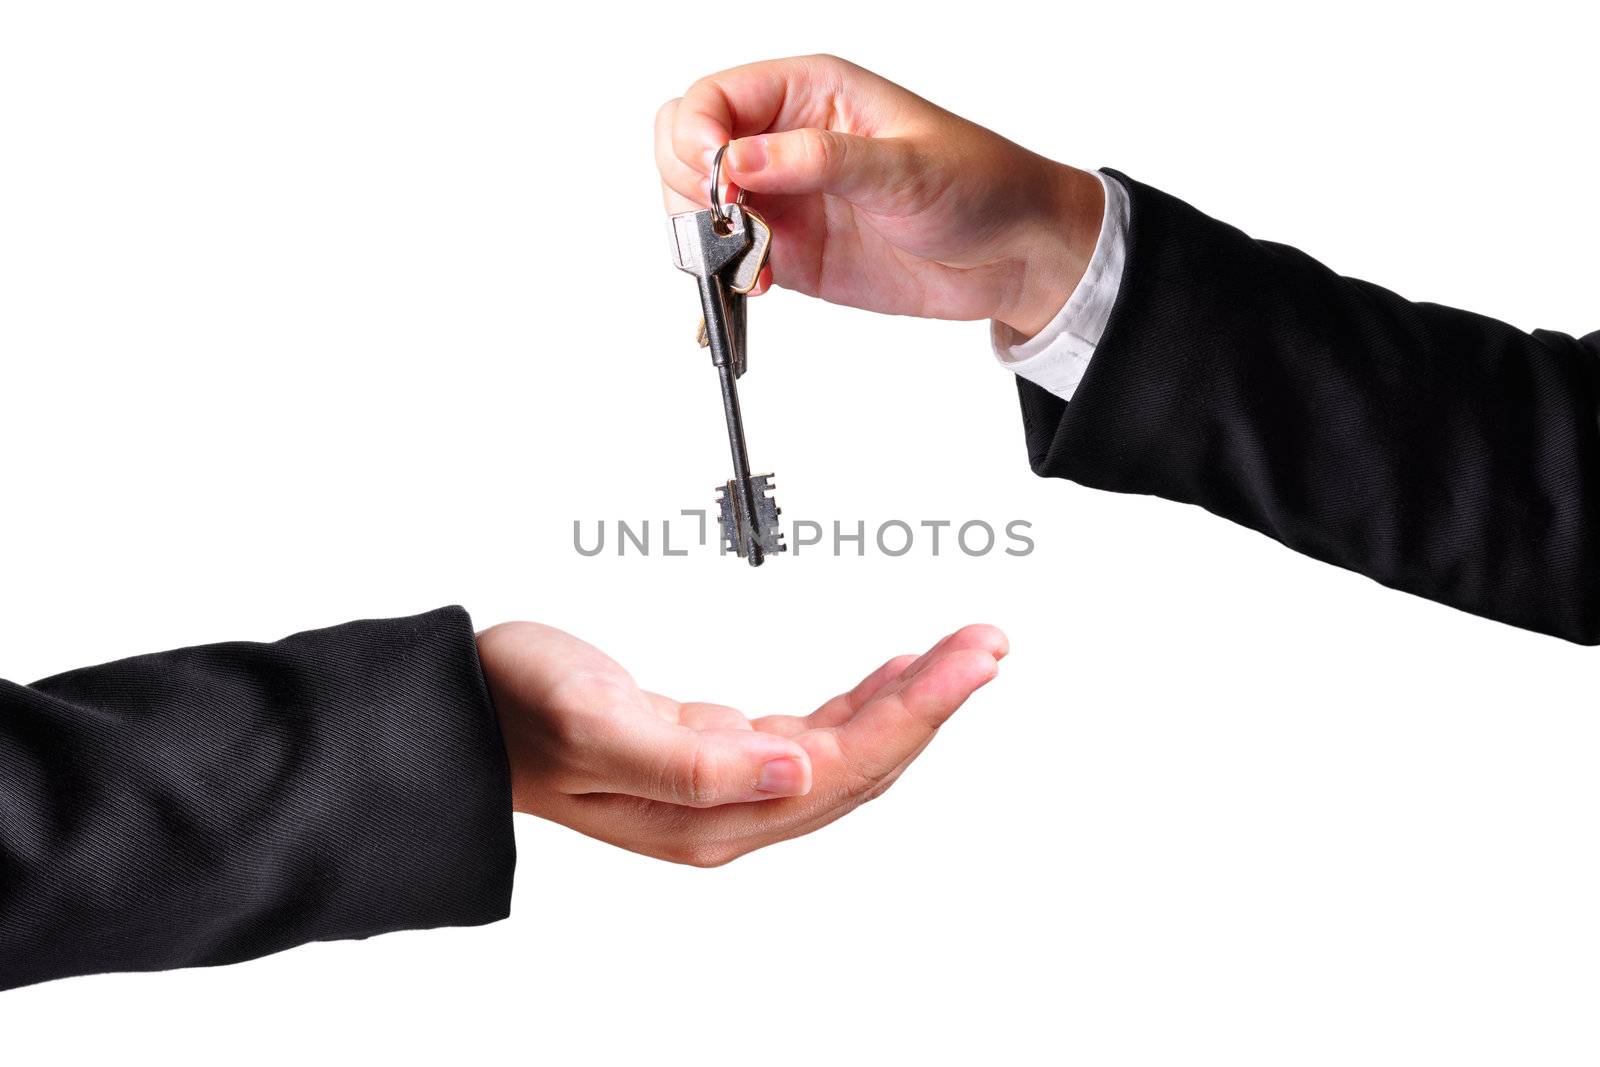 Handing over the keys by ruigsantos